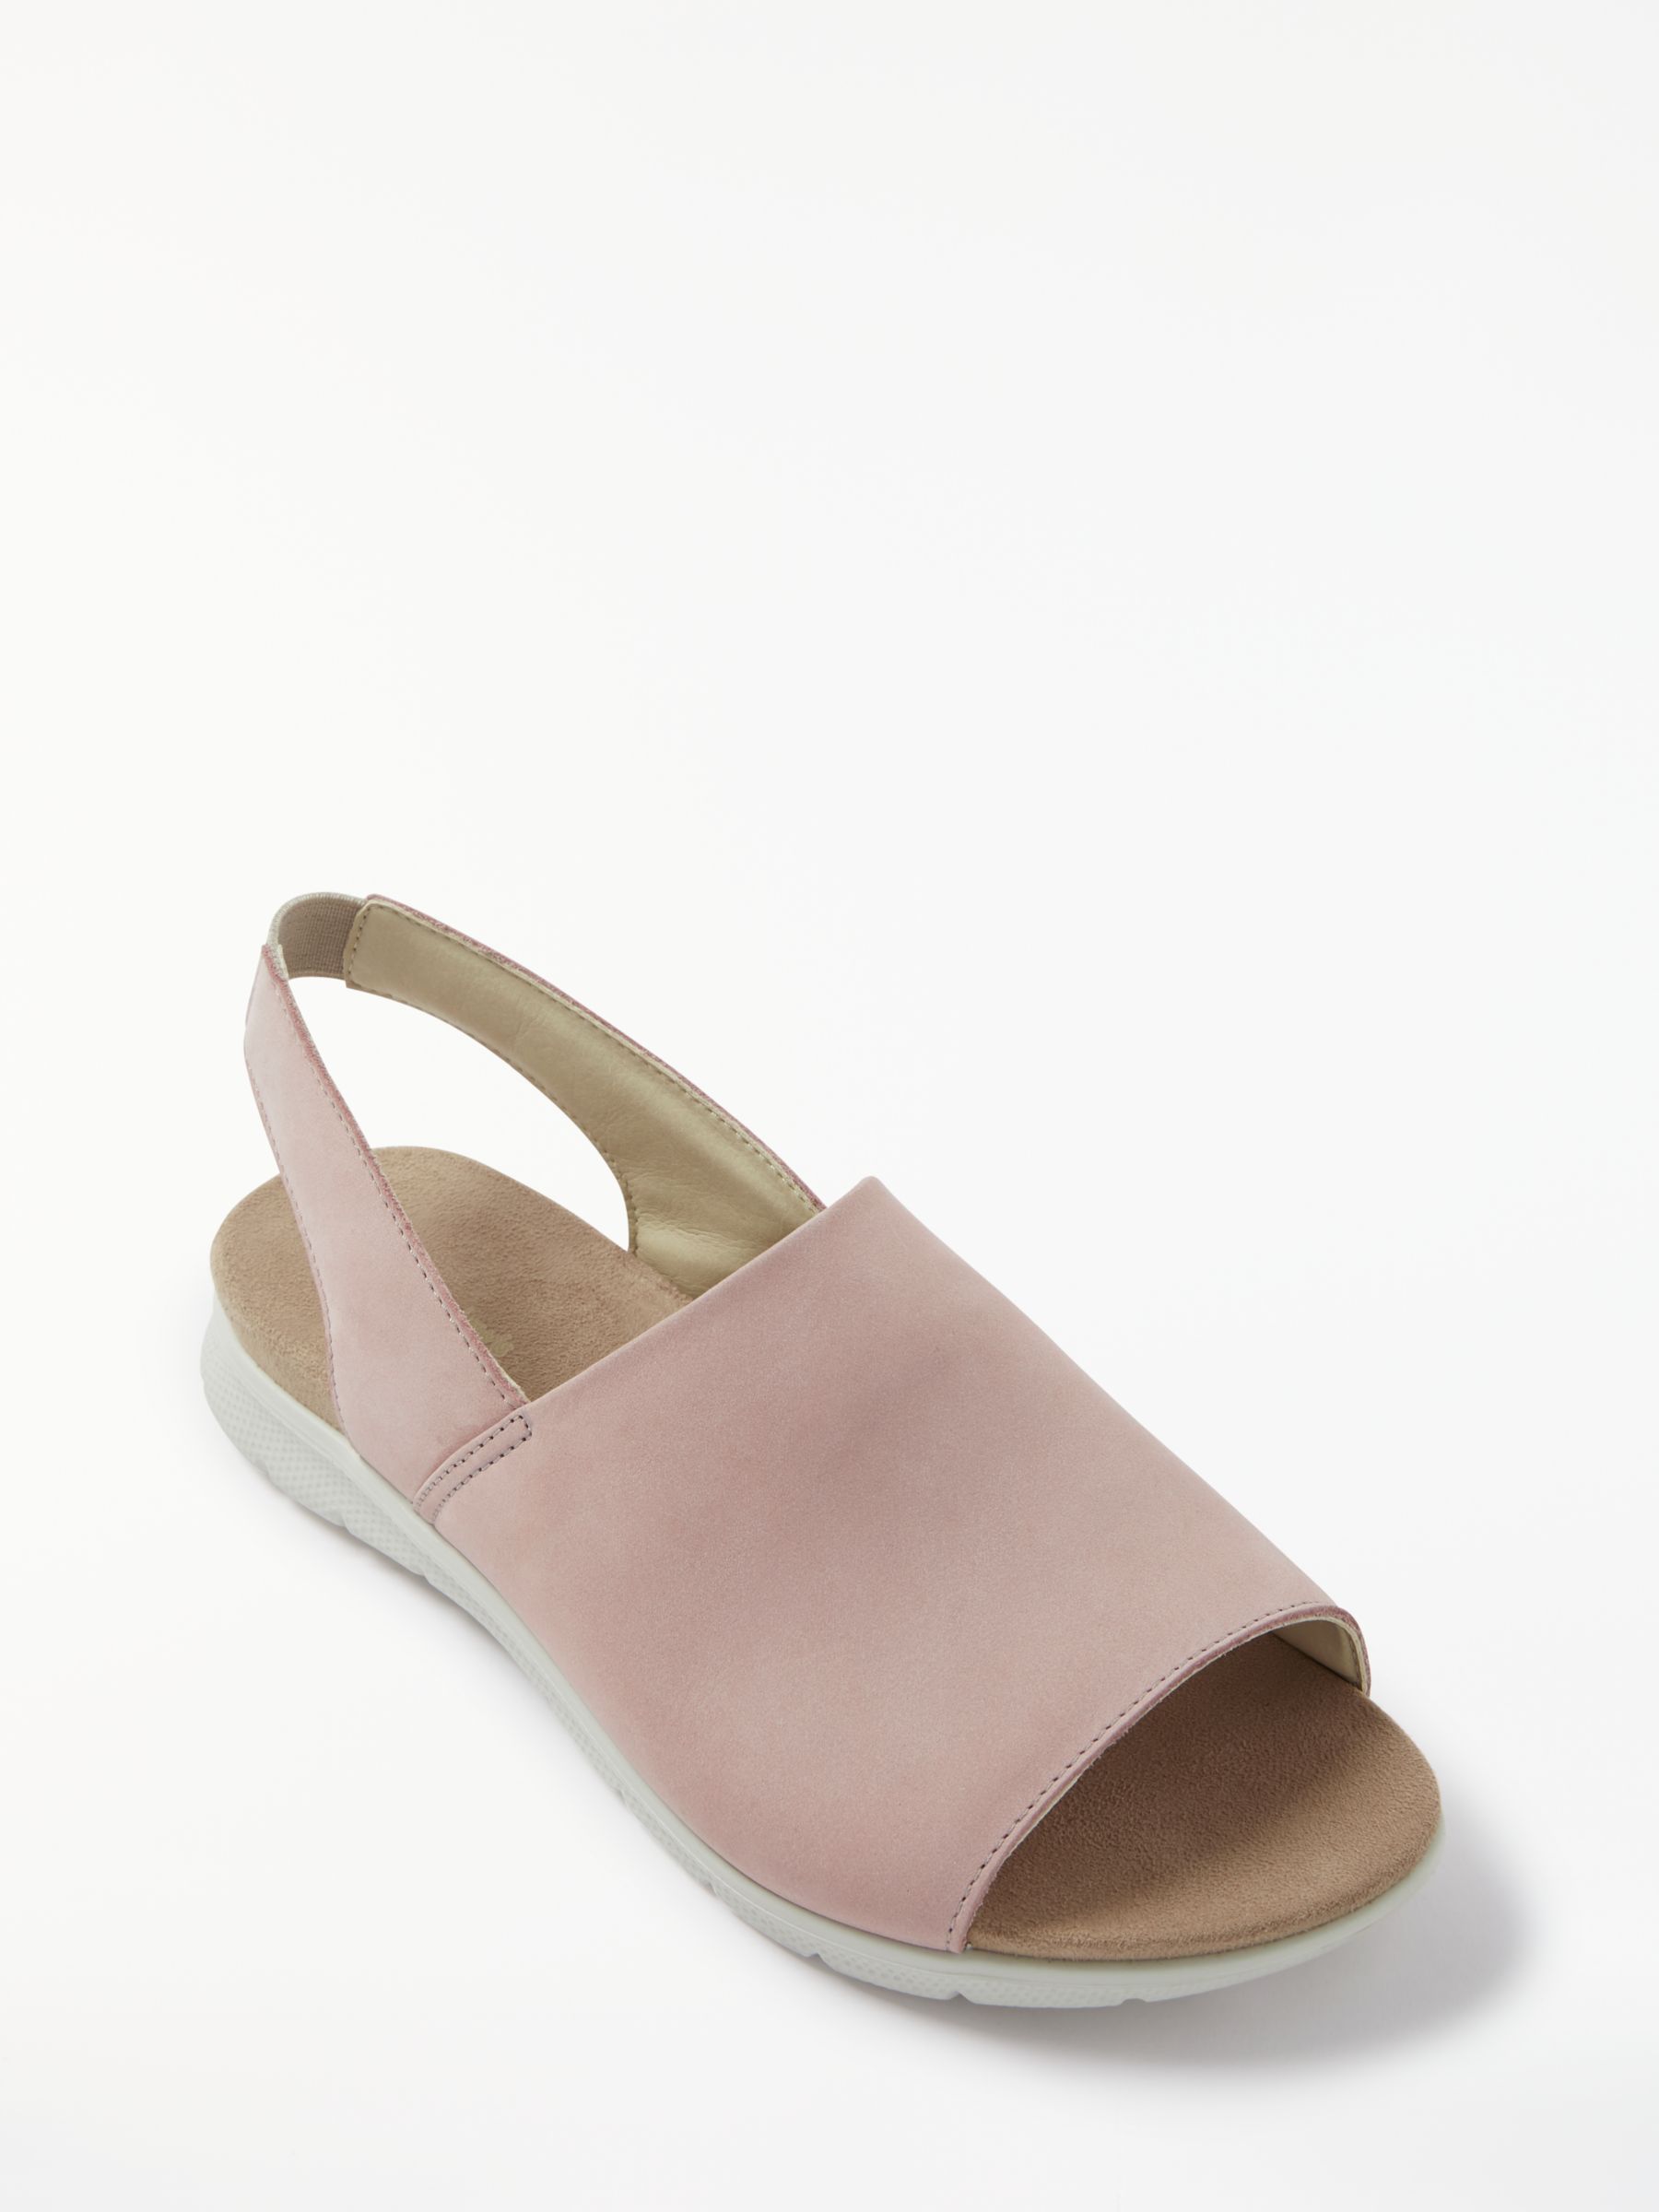 John Lewis & Partners Designed for Comfort Lainie Sandals, Pink Nubuck